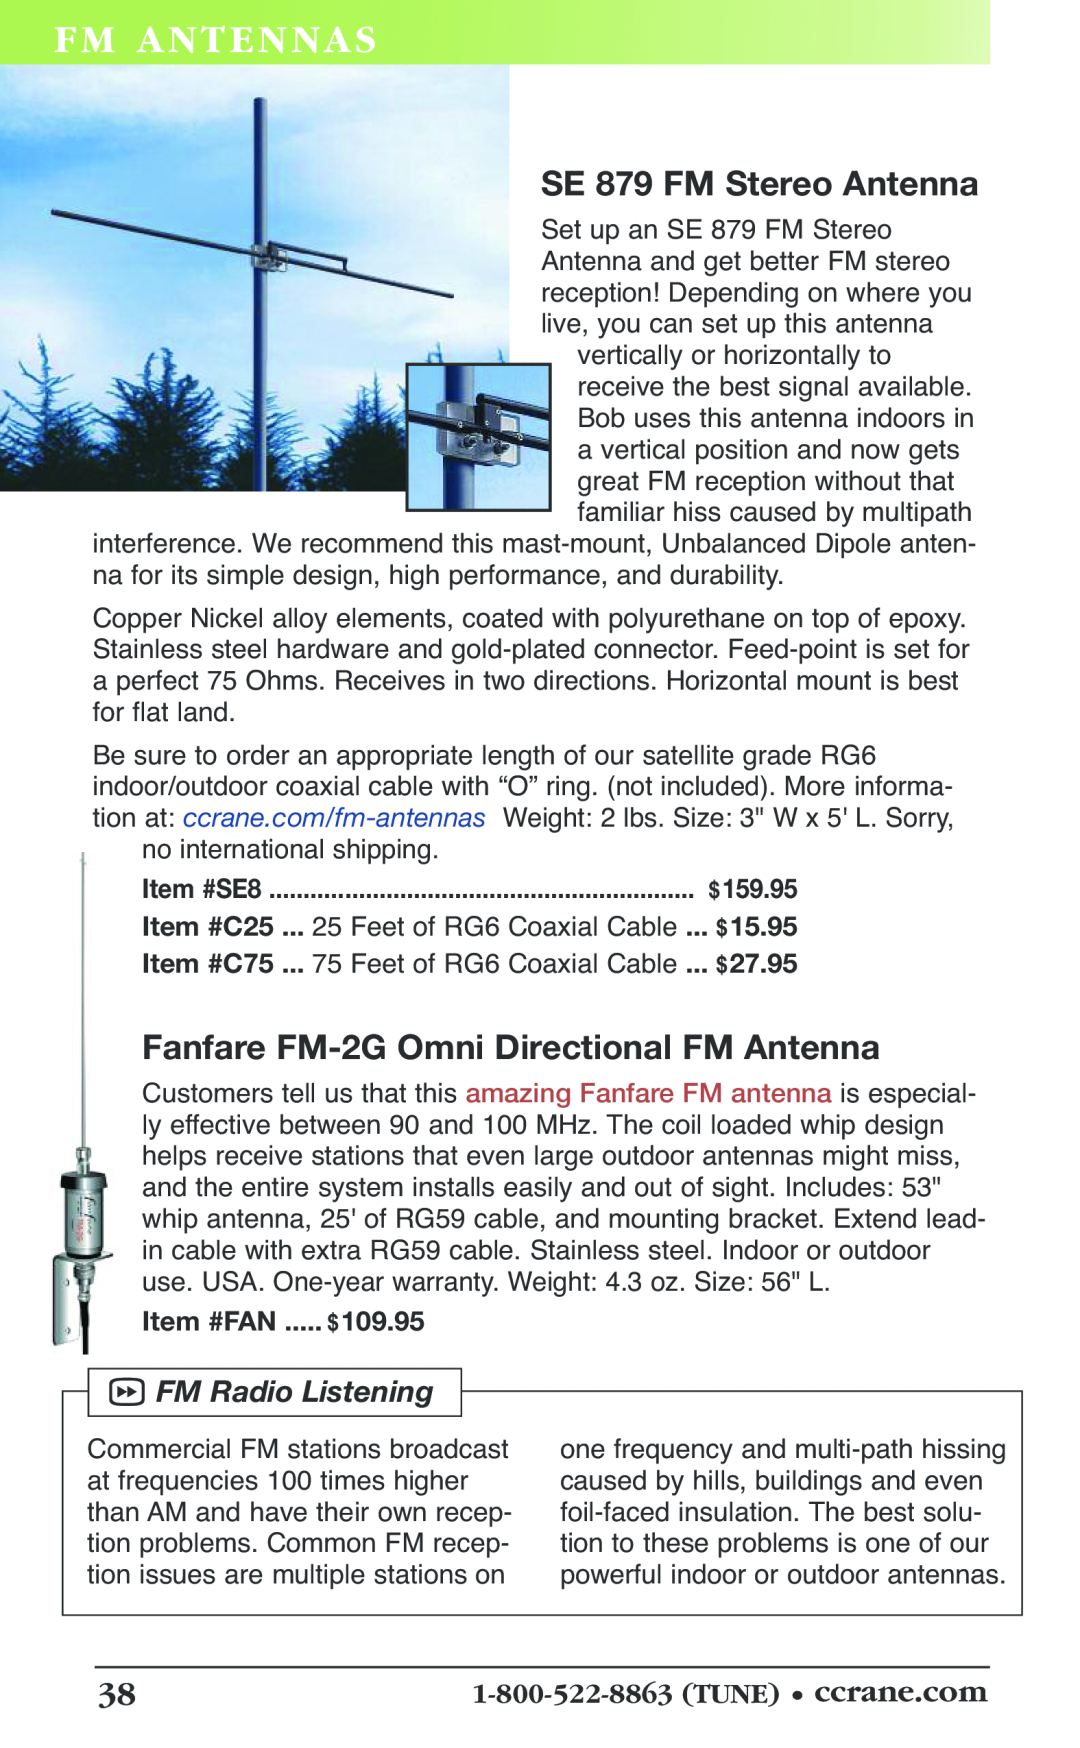 C. Crane 19f manual Fm An Tennas, SE 879 FM Stereo Antenna, Fanfare FM-2GOmni Directional FM Antenna, $15.95, Item #SE8 